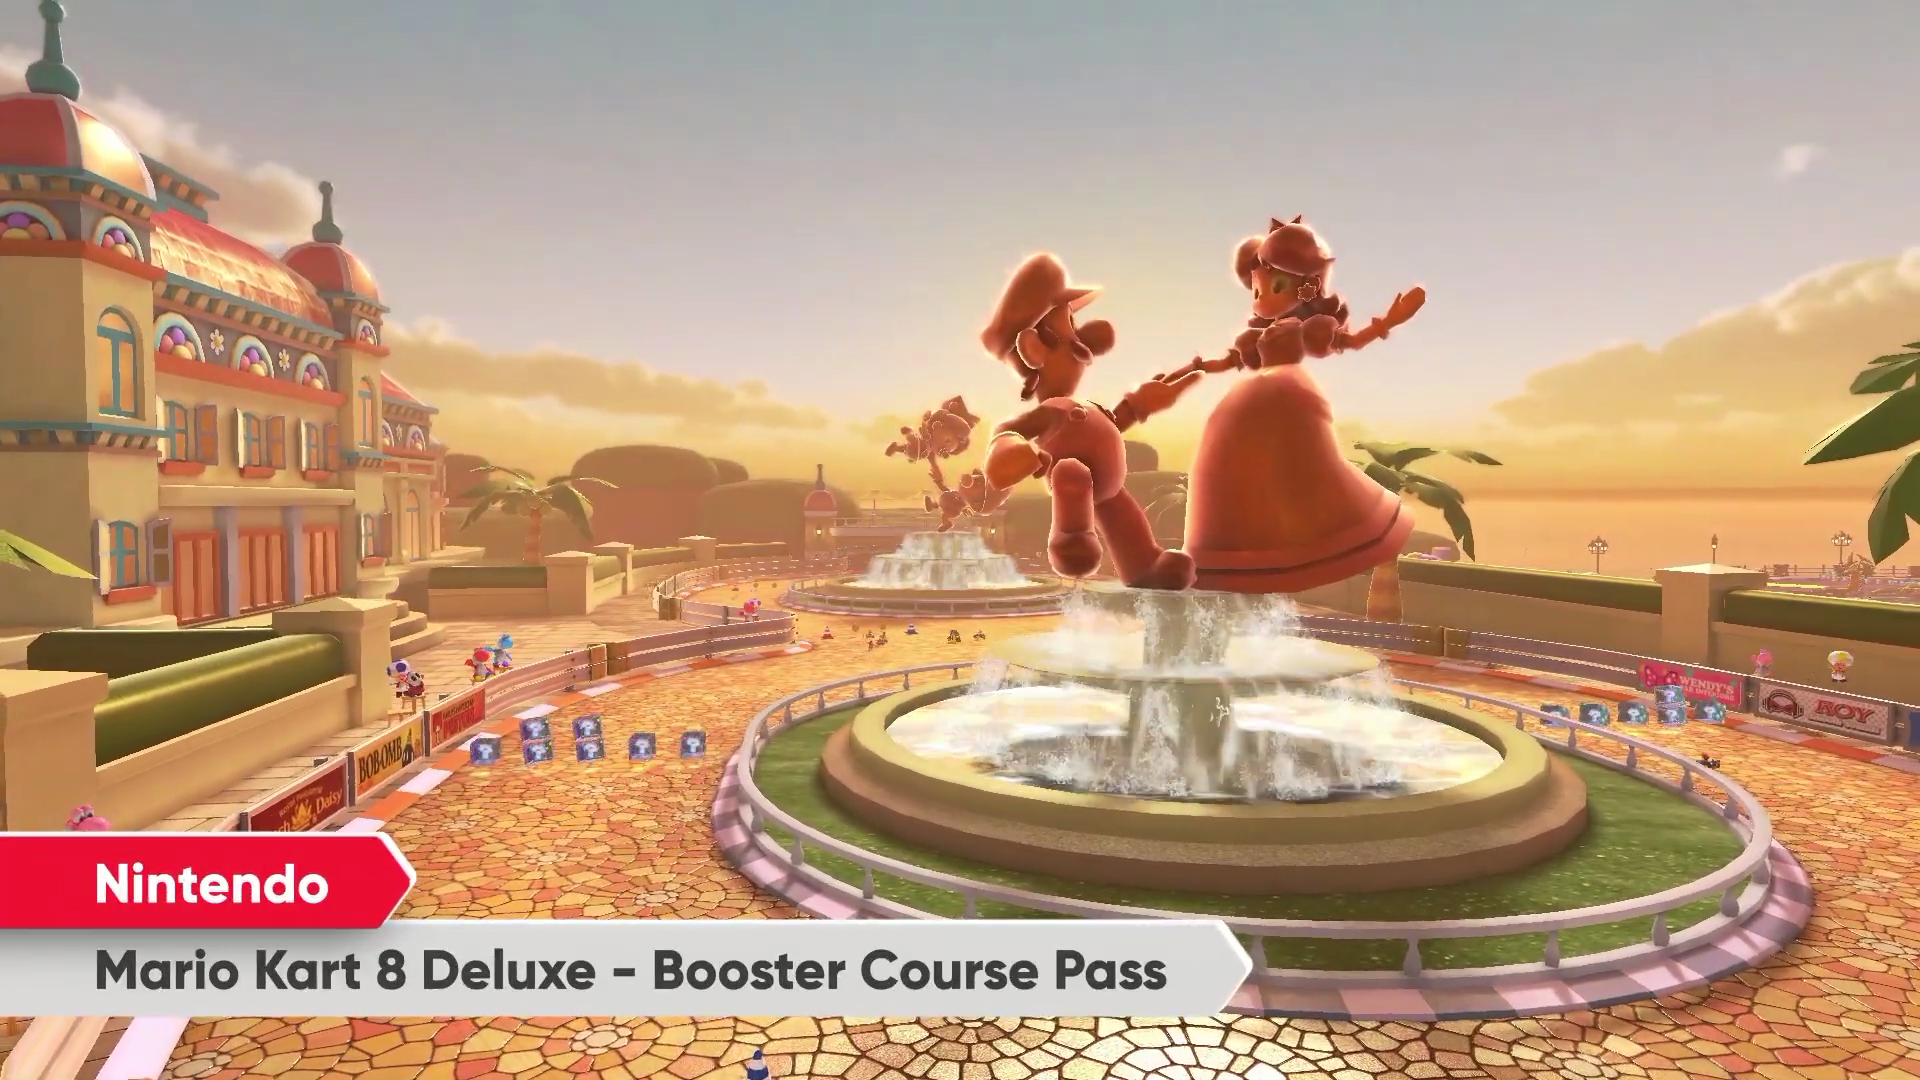 Mario Kart 8 Deluxe - Booster Course Pass Wave 6 Wii Daisy Circuit | Image: Nintendo